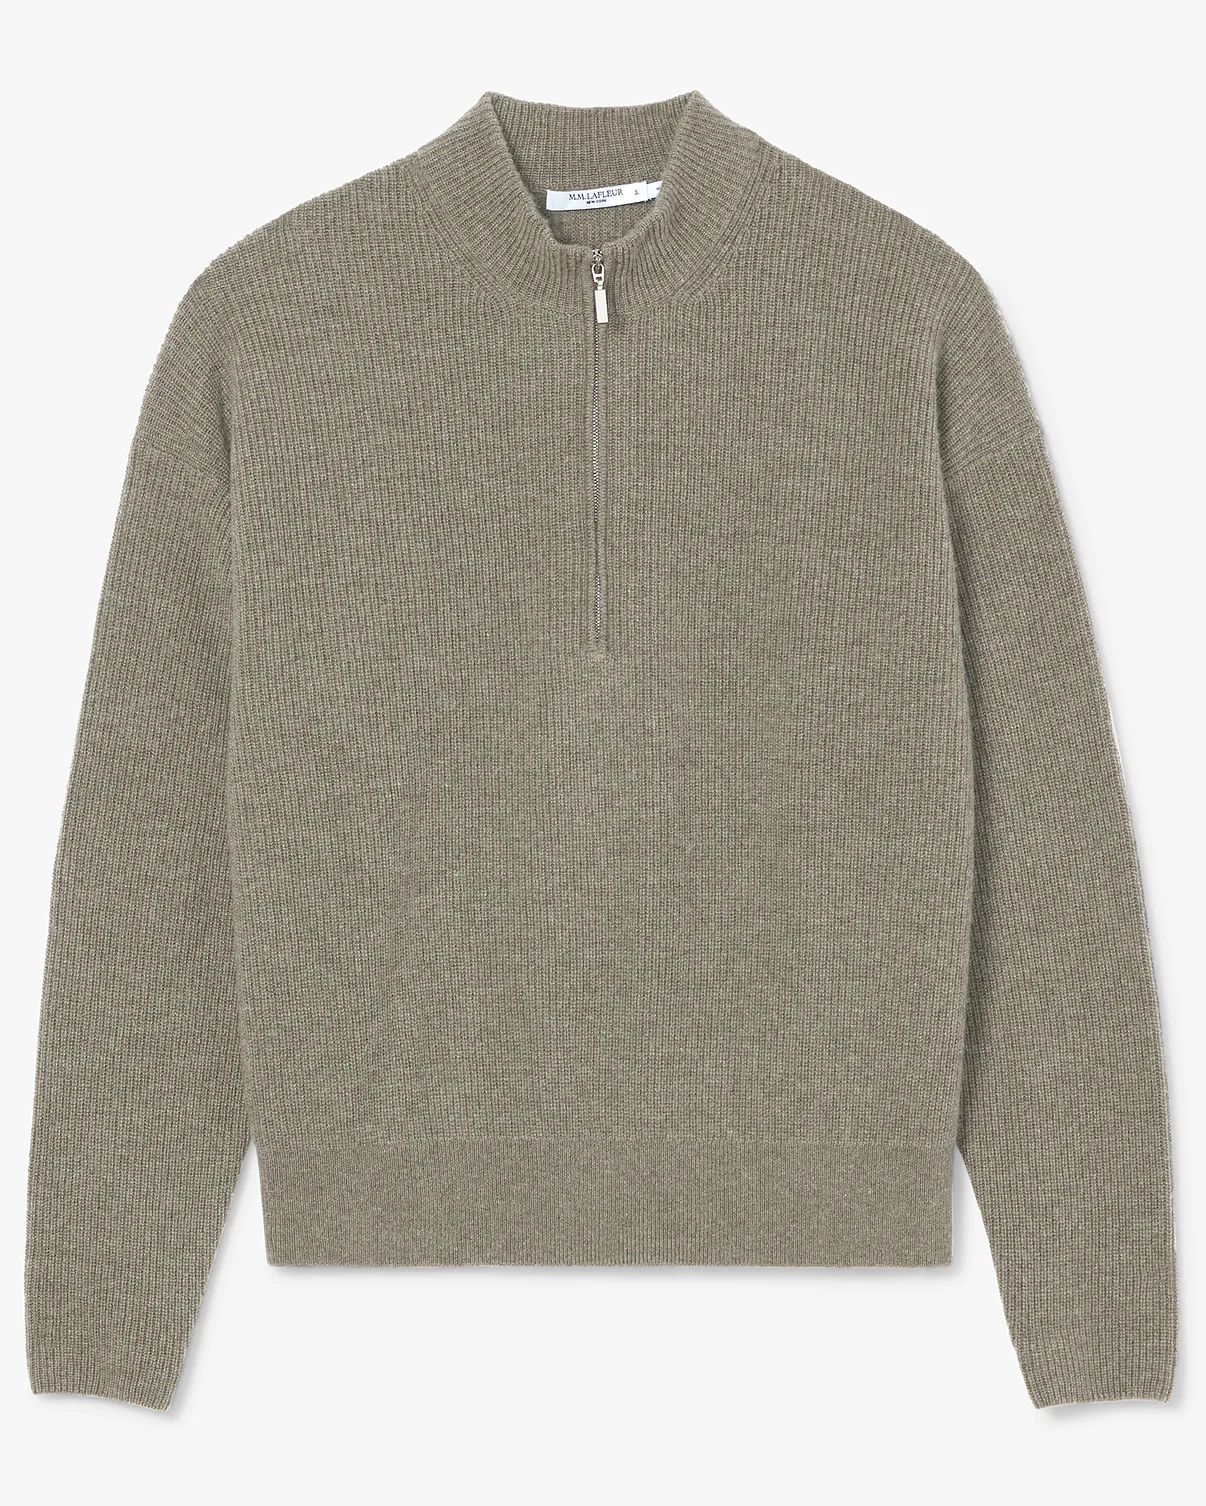 The Cece Sweater - Cashmere | MM LaFleur